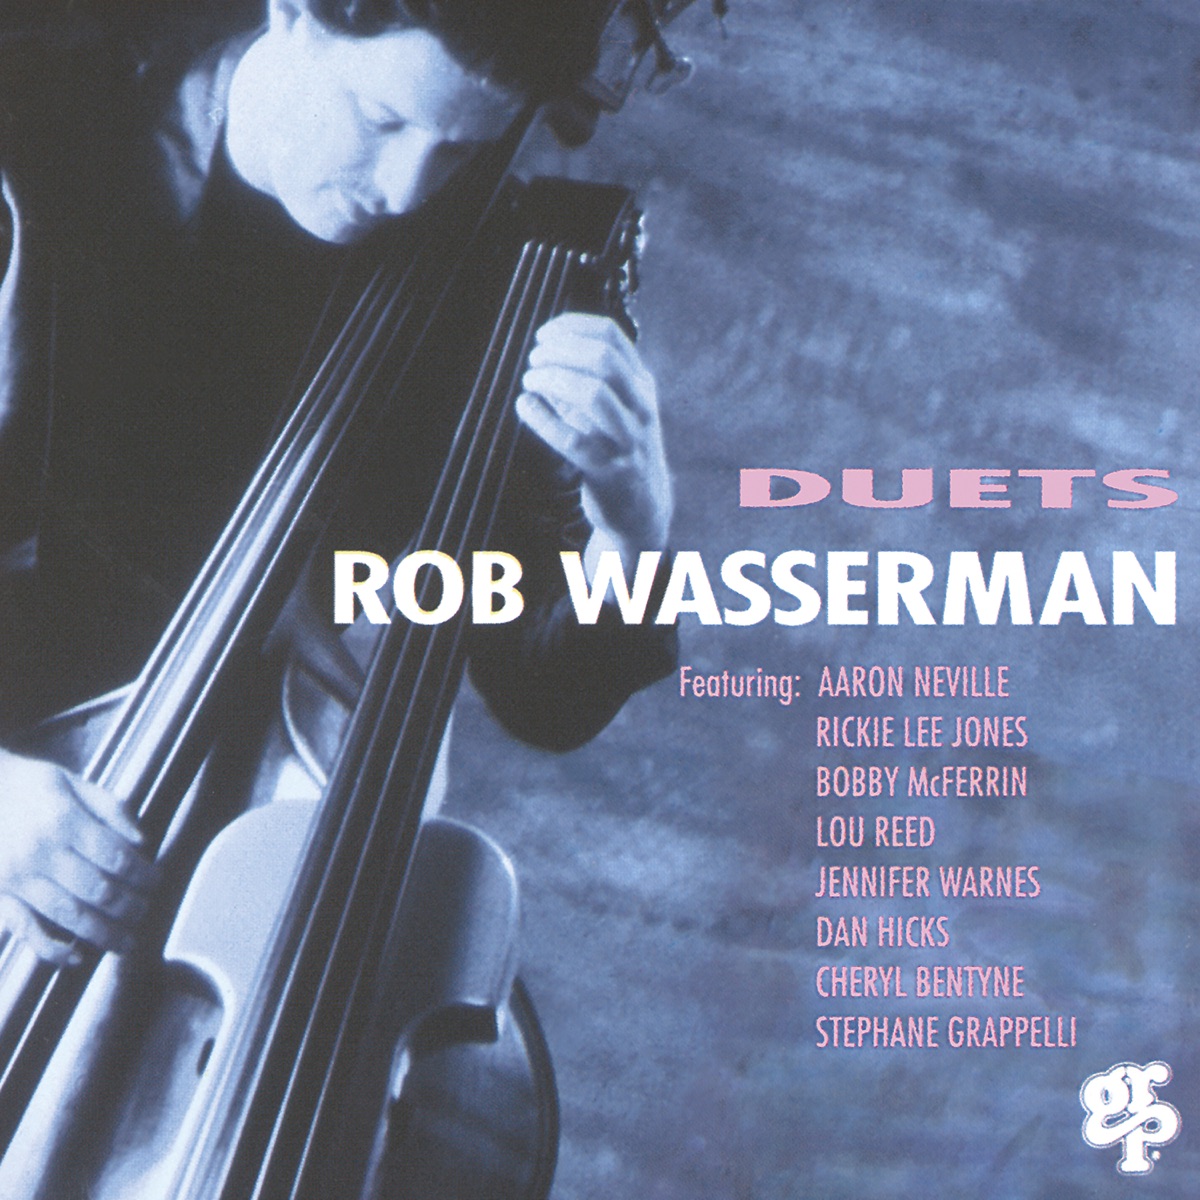 Duets - Album by Rob Wasserman - Apple Music